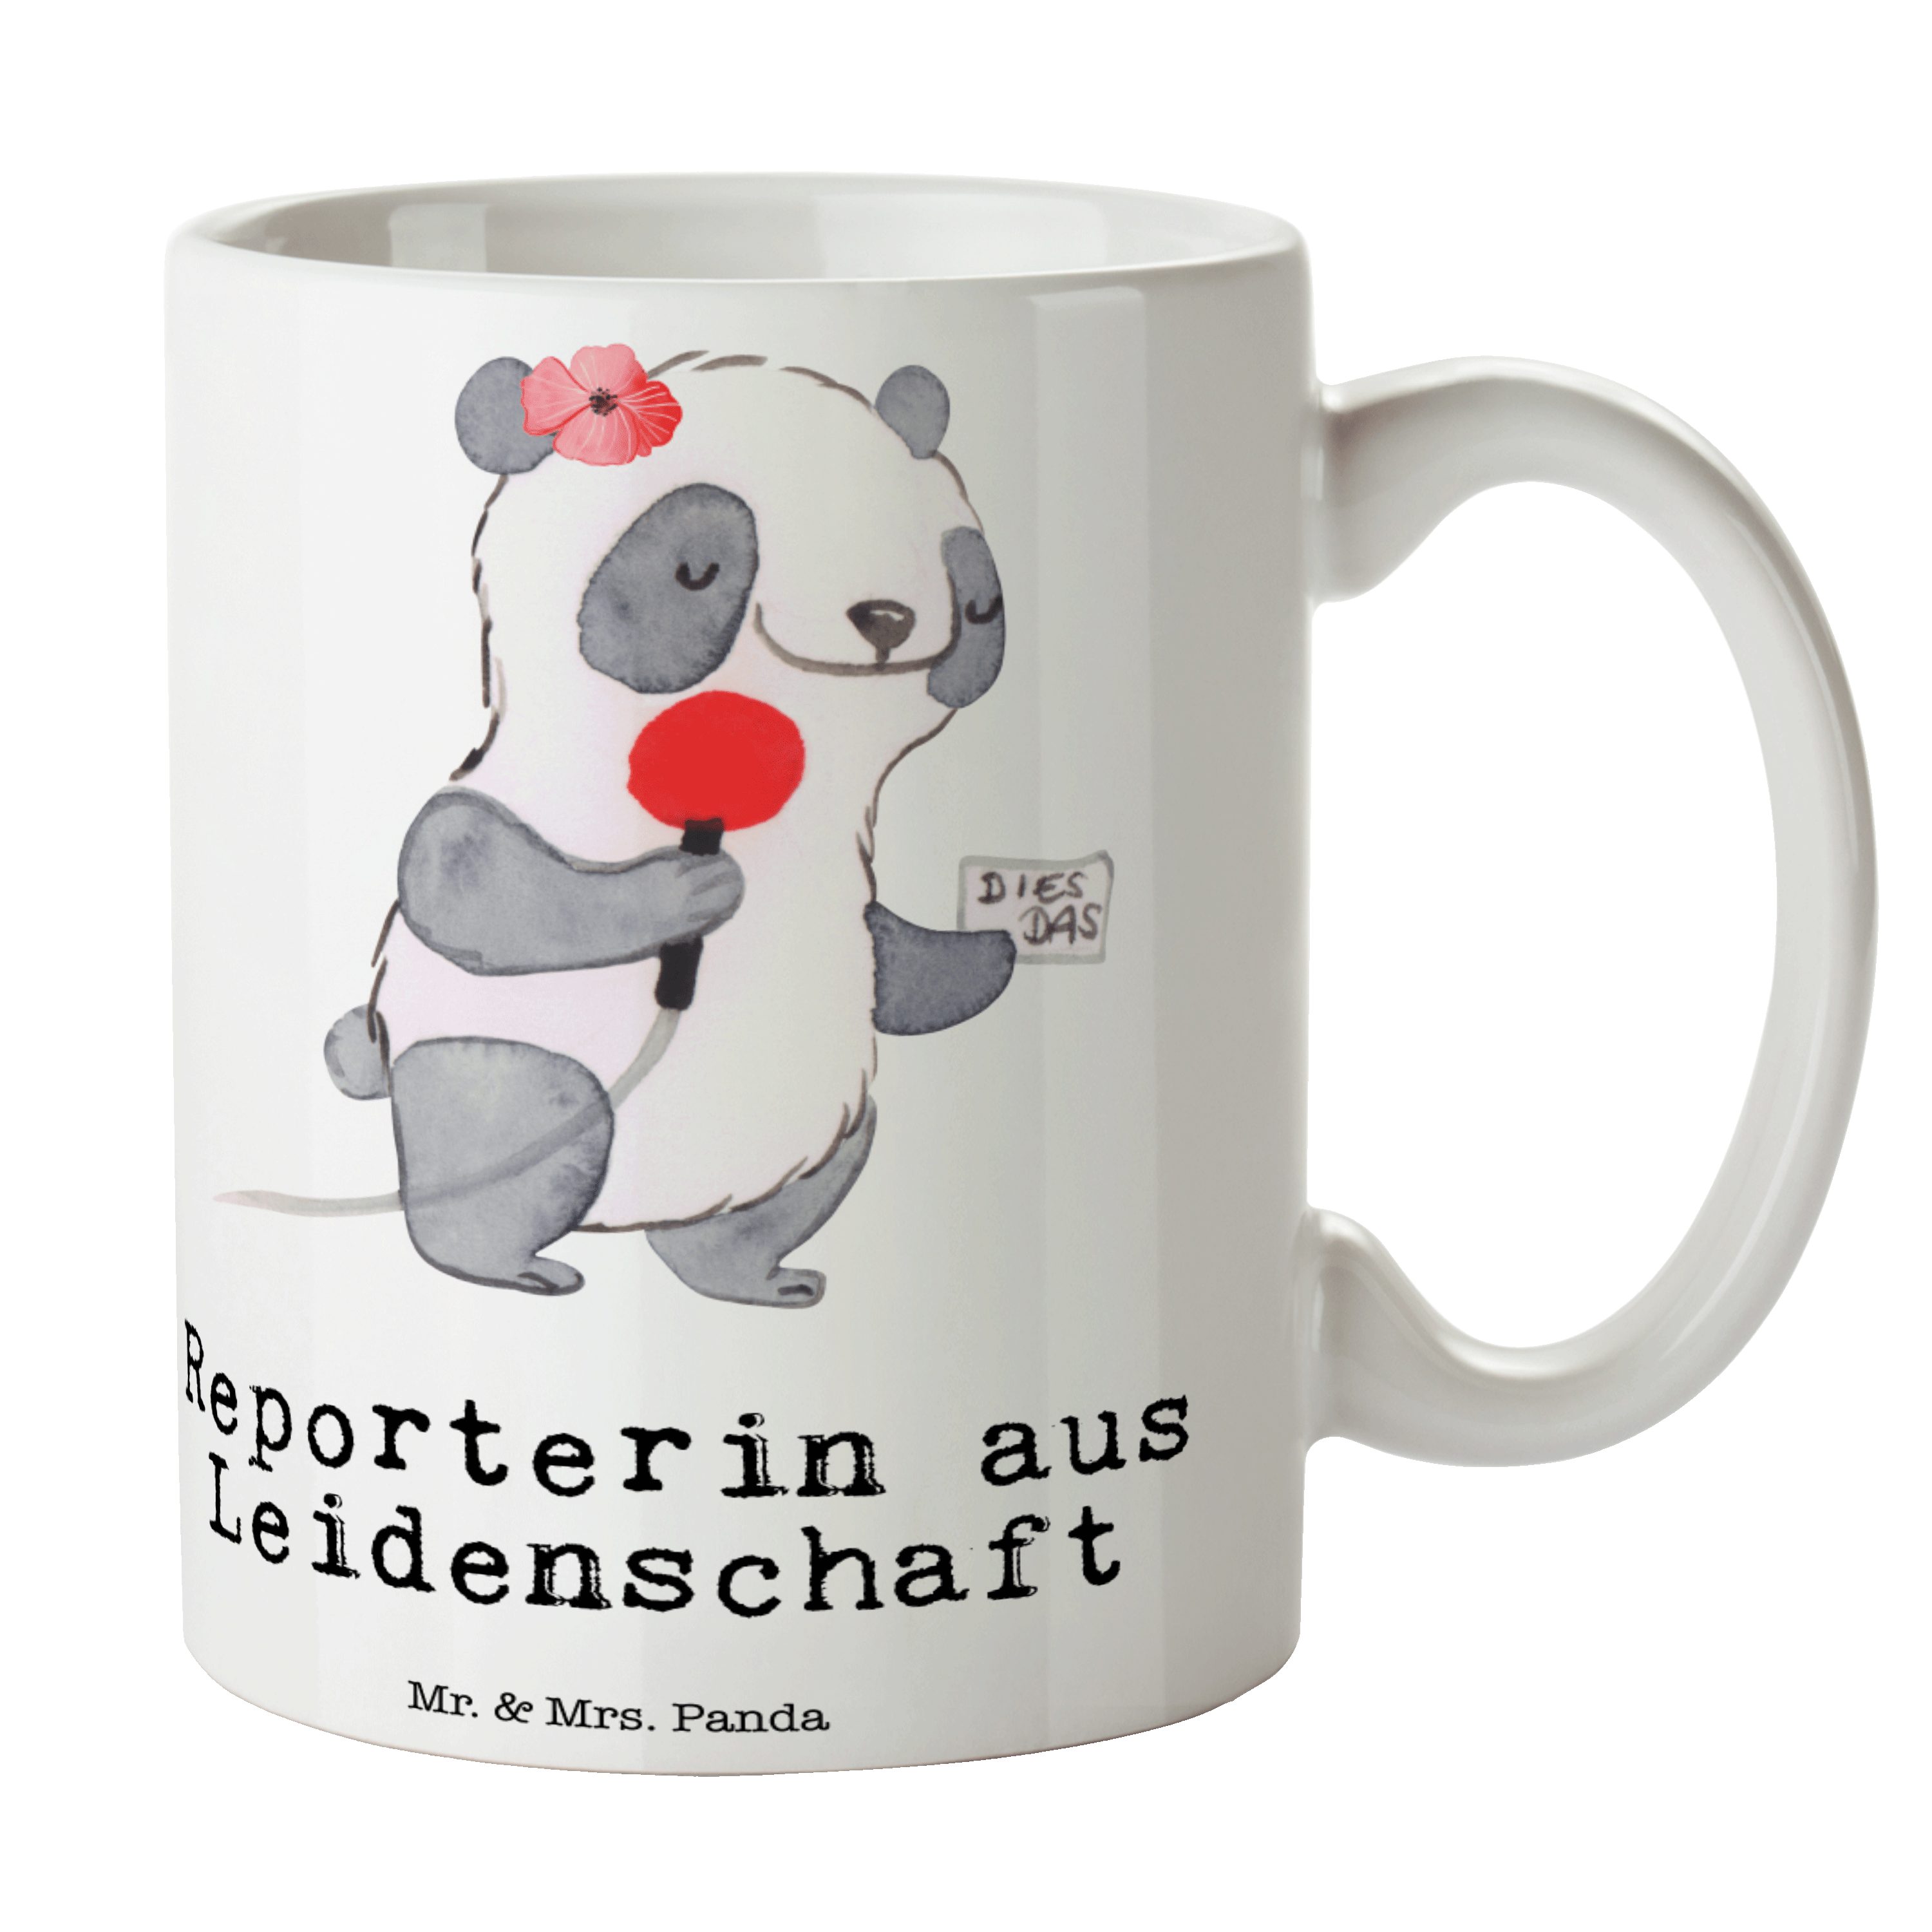 Mr. & Mrs. Leidenschaft aus Reporterin Tasse - Keramik Weiß Geschenk - Tasse, Kaffee, Panda Geschenk